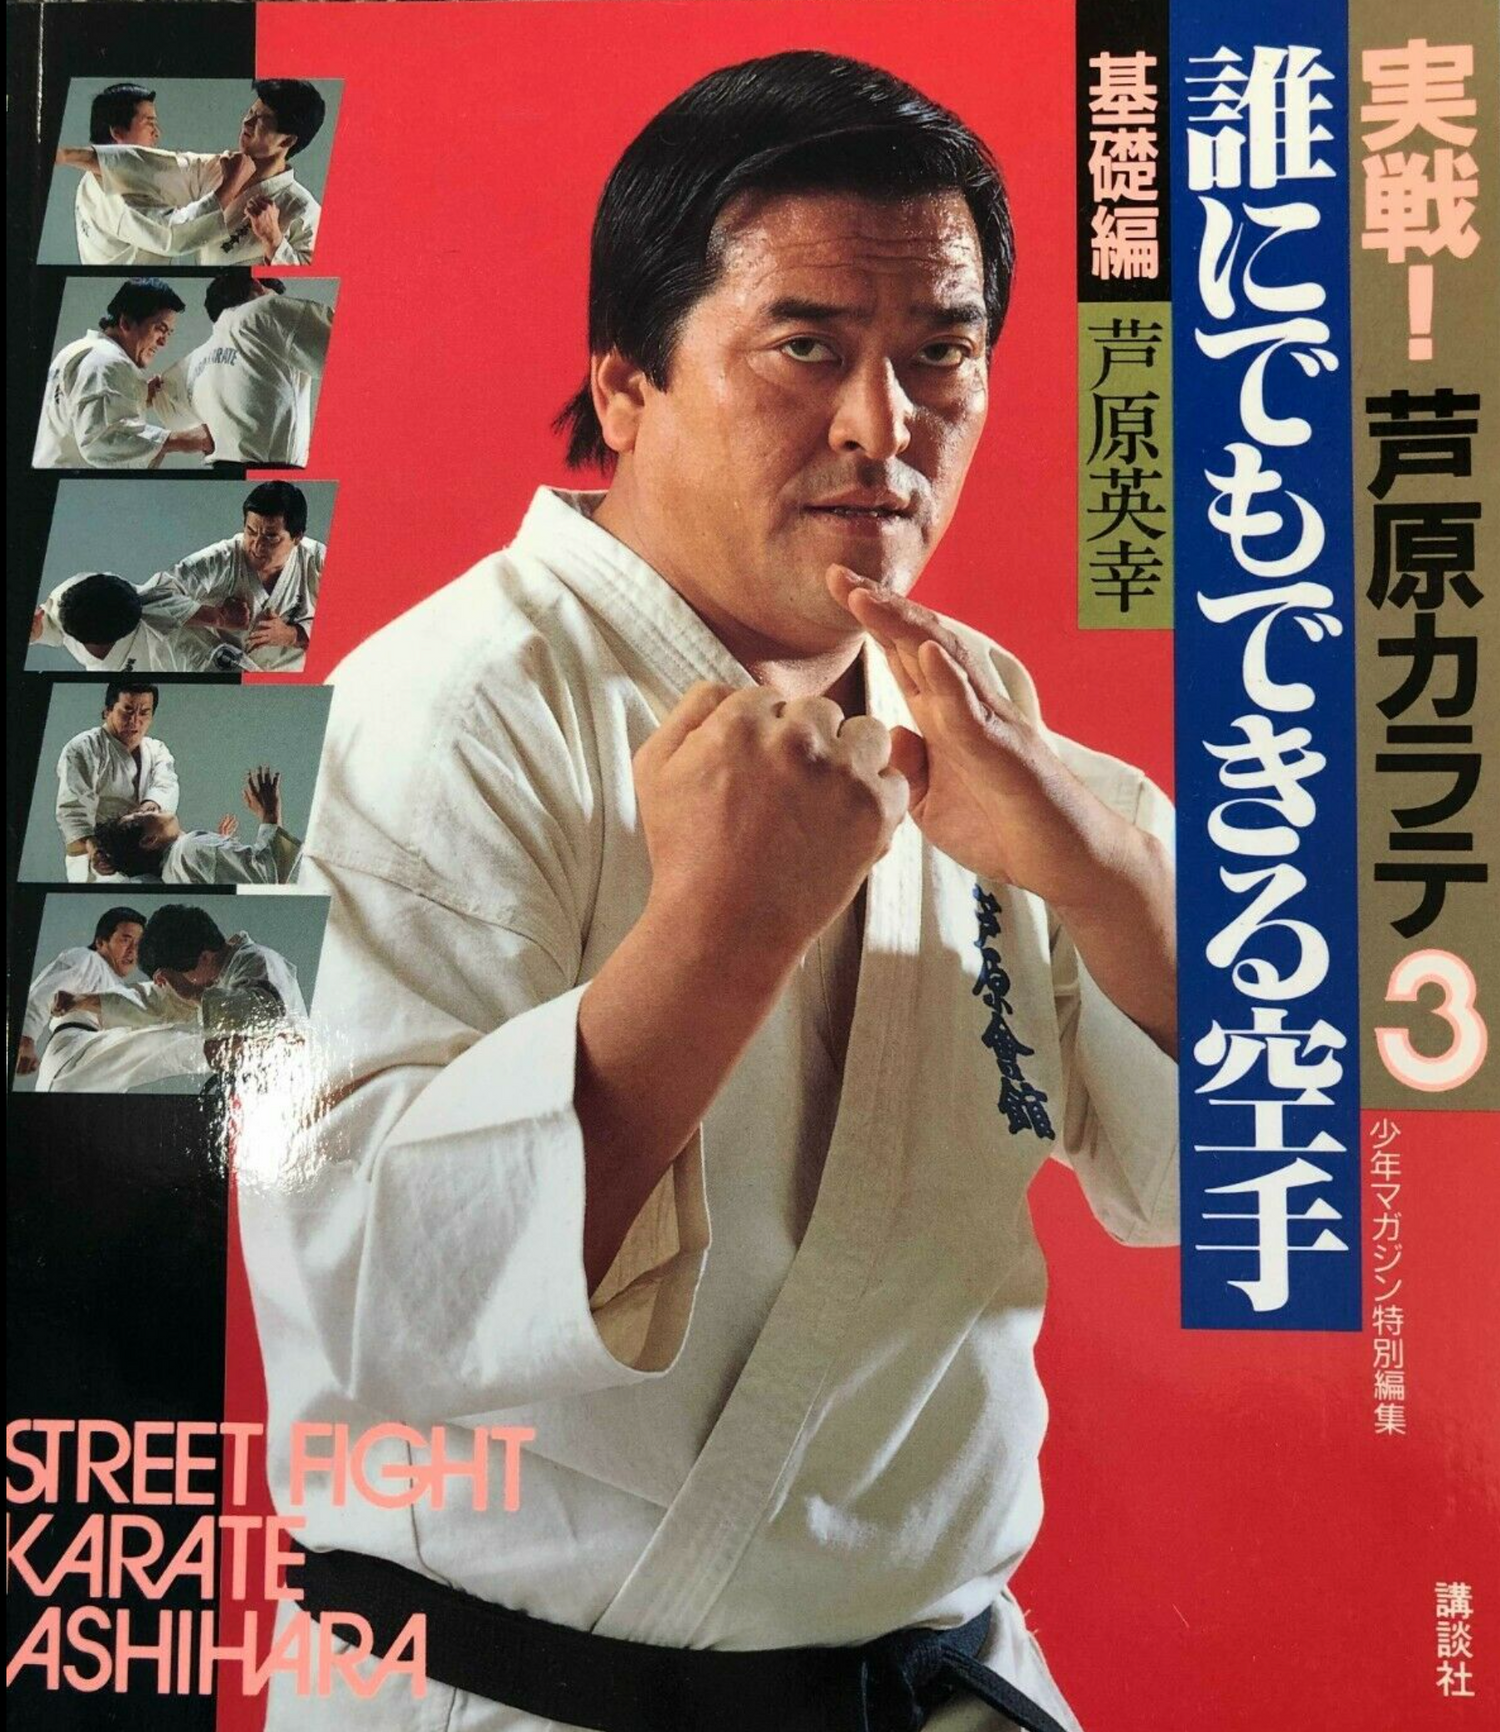 Street Fight Karate Book 3 by Hideyuki Ashihara (Preowned) - Budovideos Inc